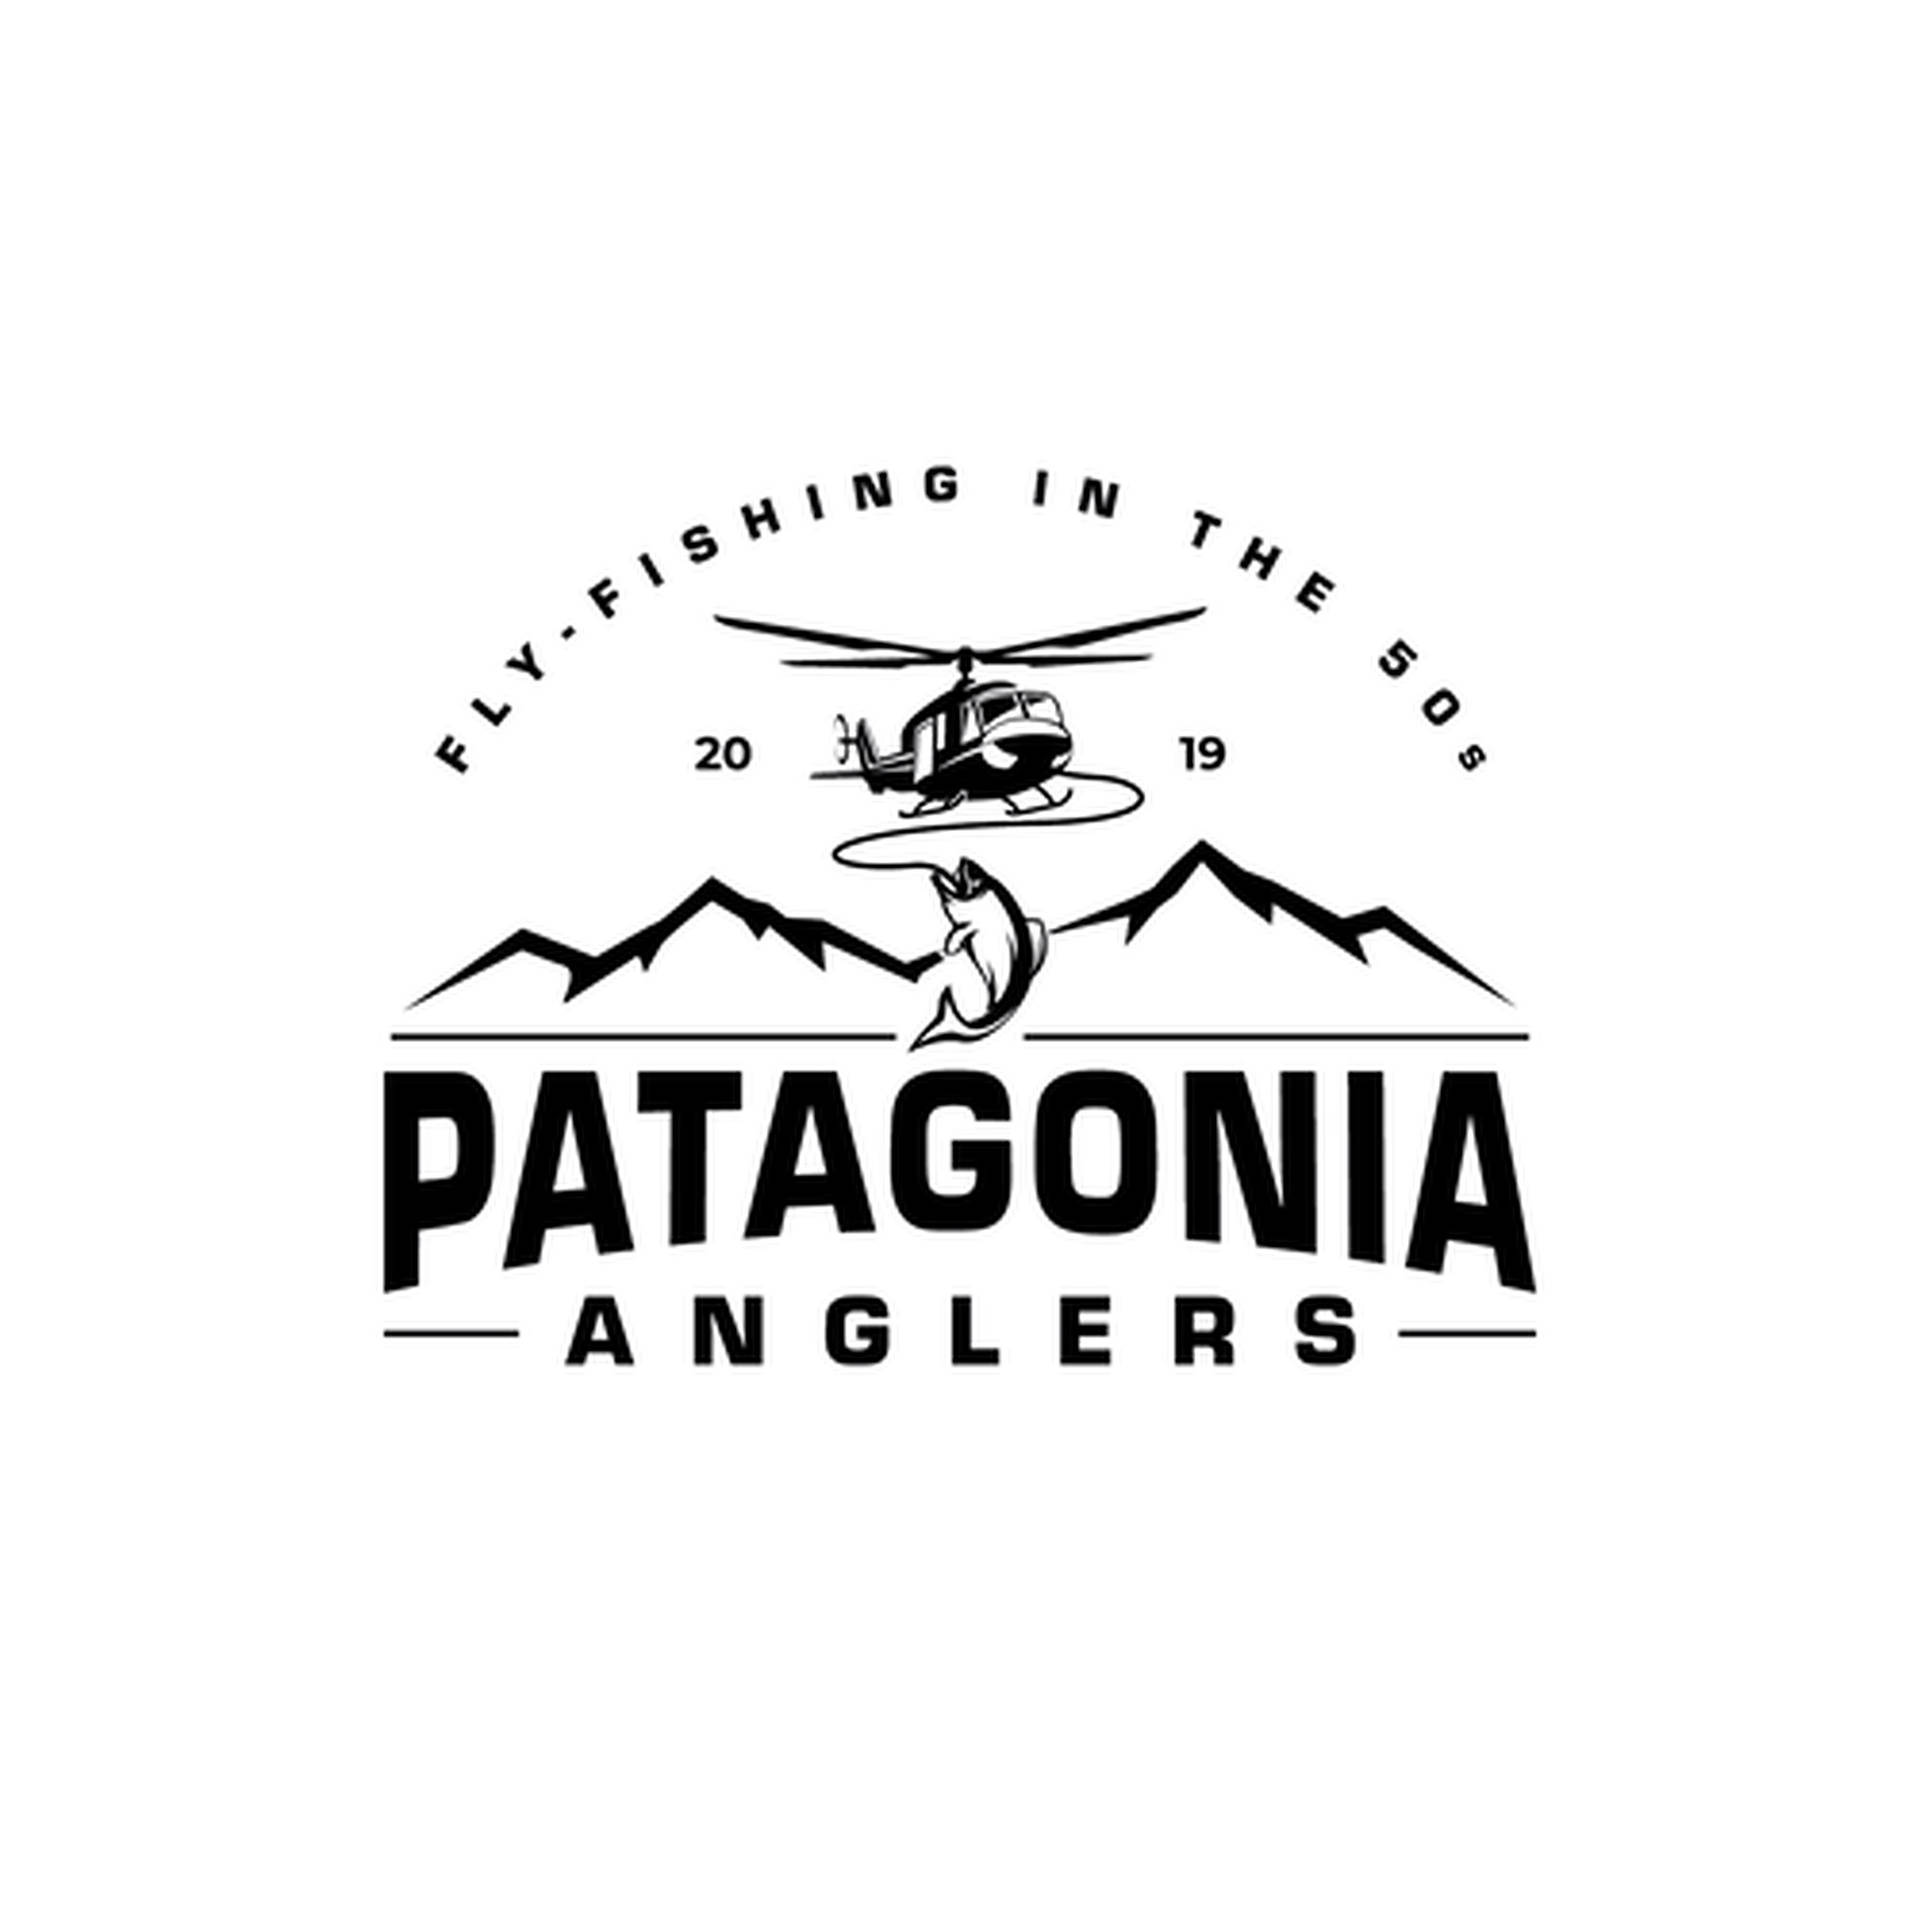 Patagonia Anglers Logo